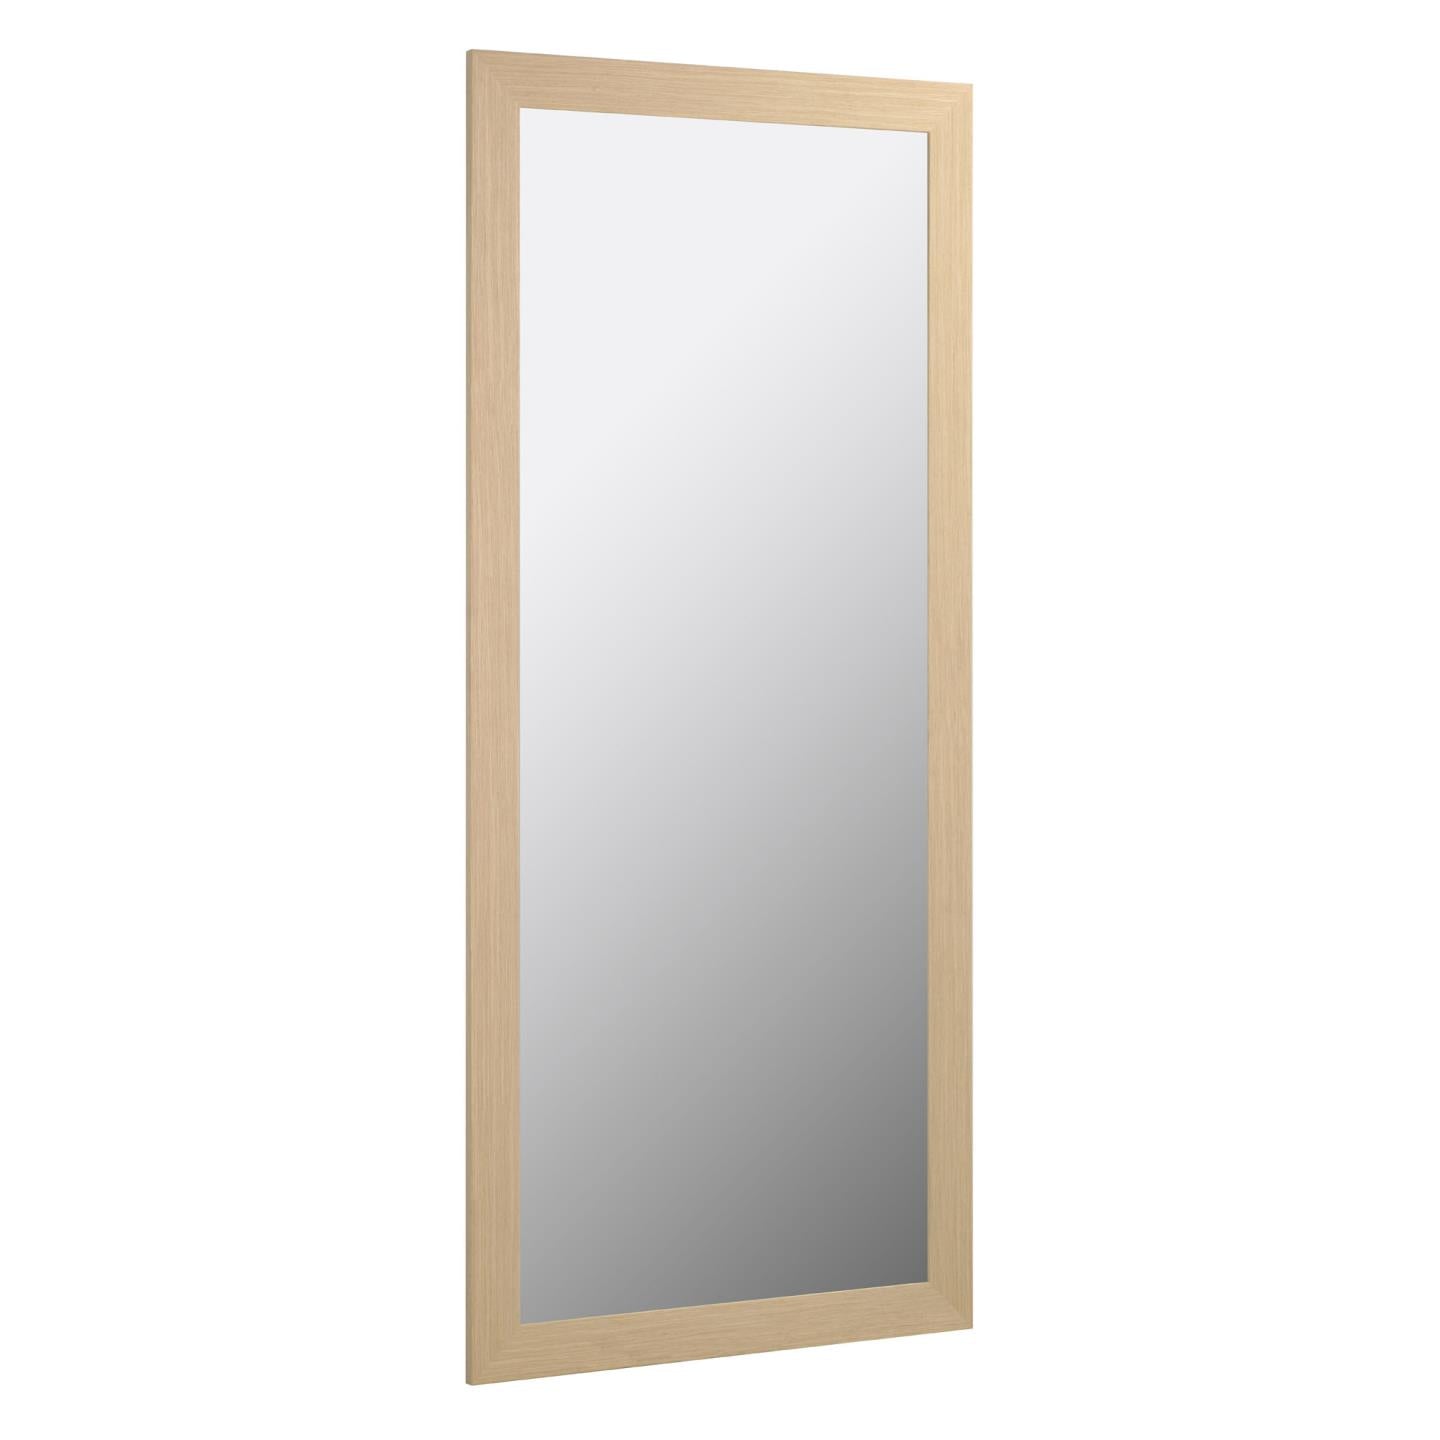 Yvaine mirror natural finish 80,5 x 180,5 cm